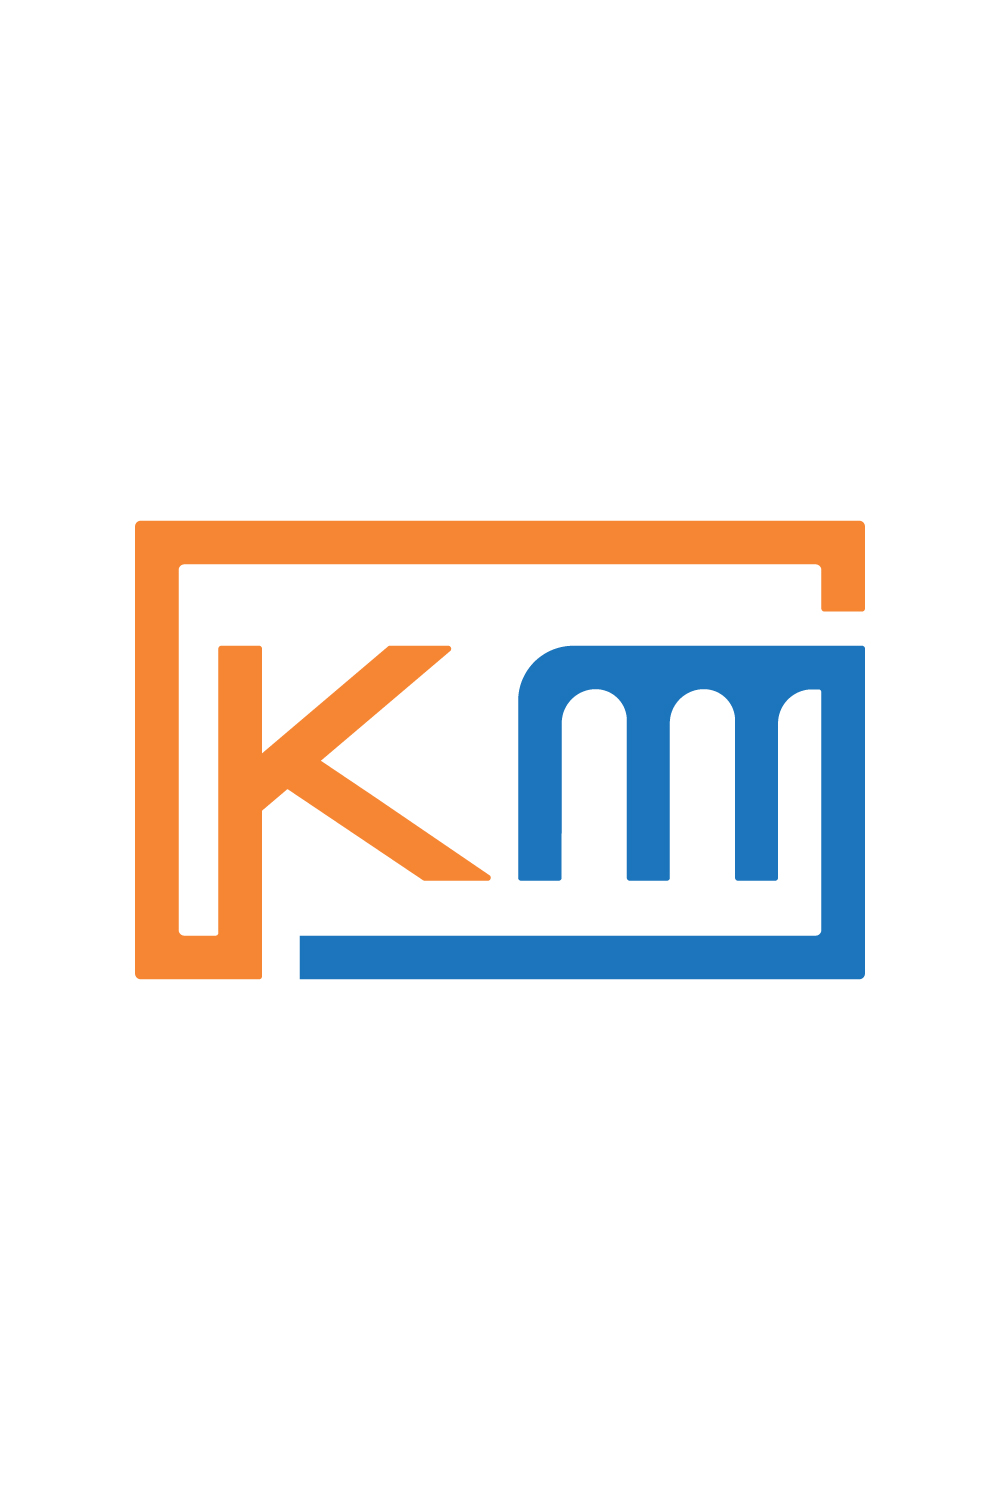 Professional KM letters logo design vector images KM logo template best identity MK logo monogram design Premium vector illustration pinterest preview image.